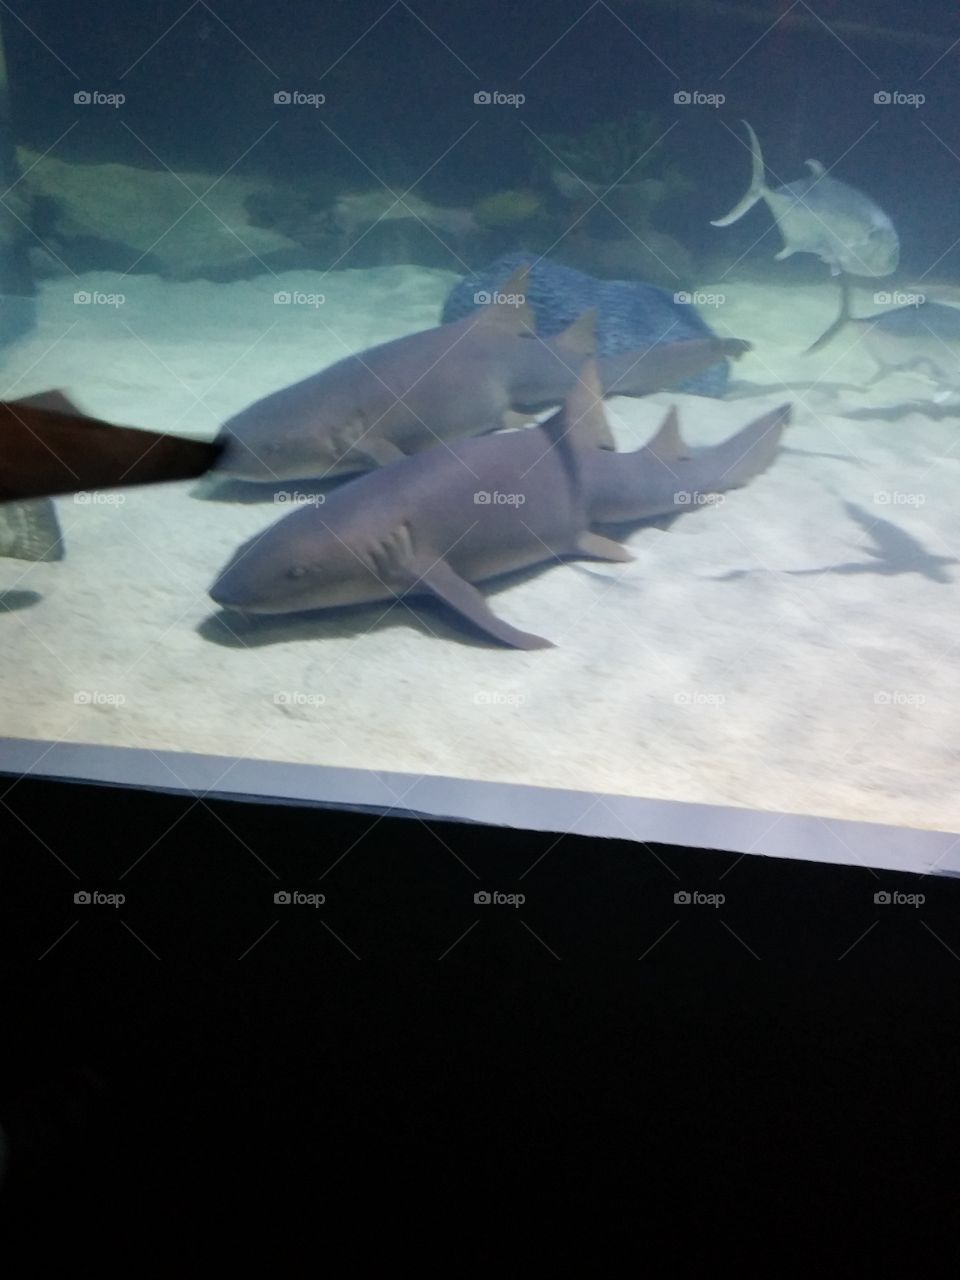 Cleveland Aquarium sharks